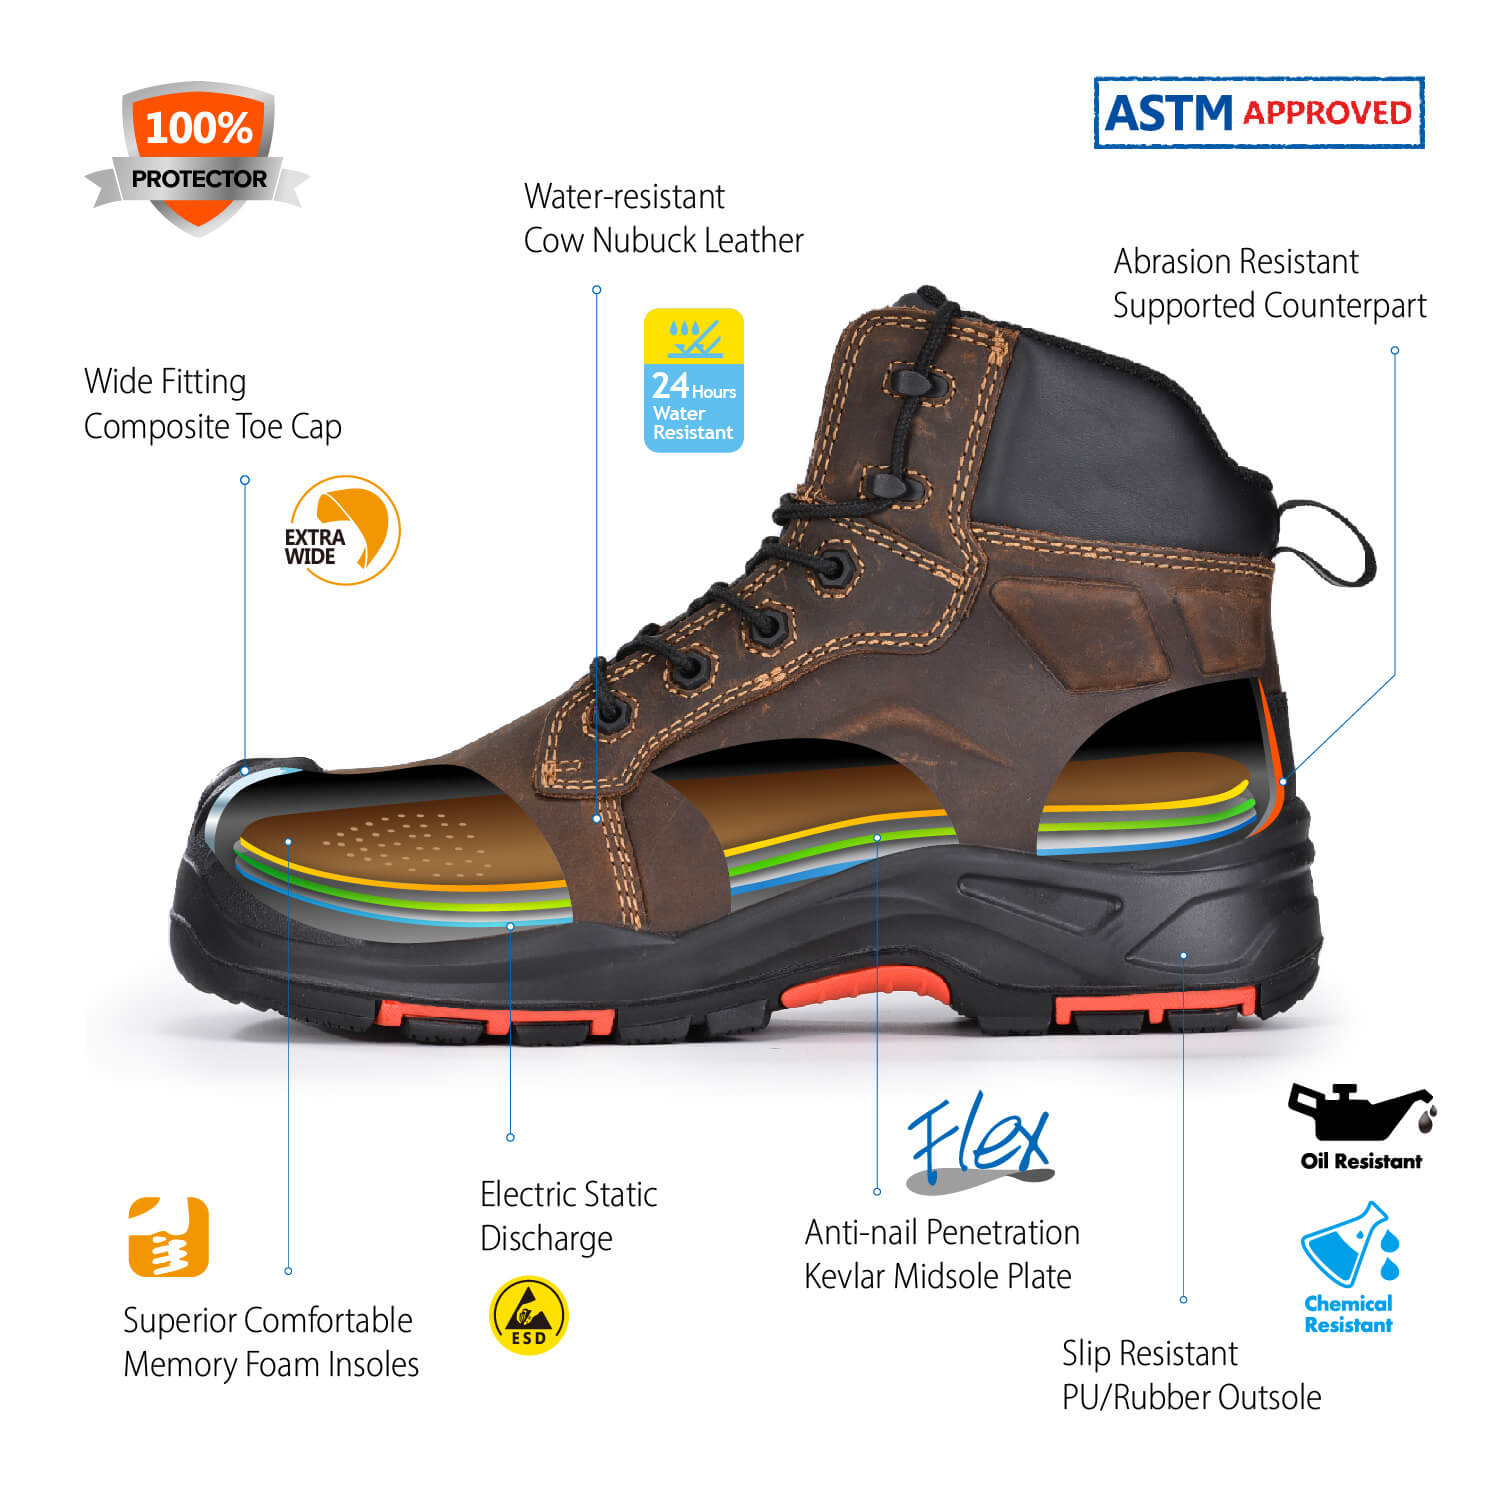 Safetoe Composite Toe Work Boots for Men - Tank